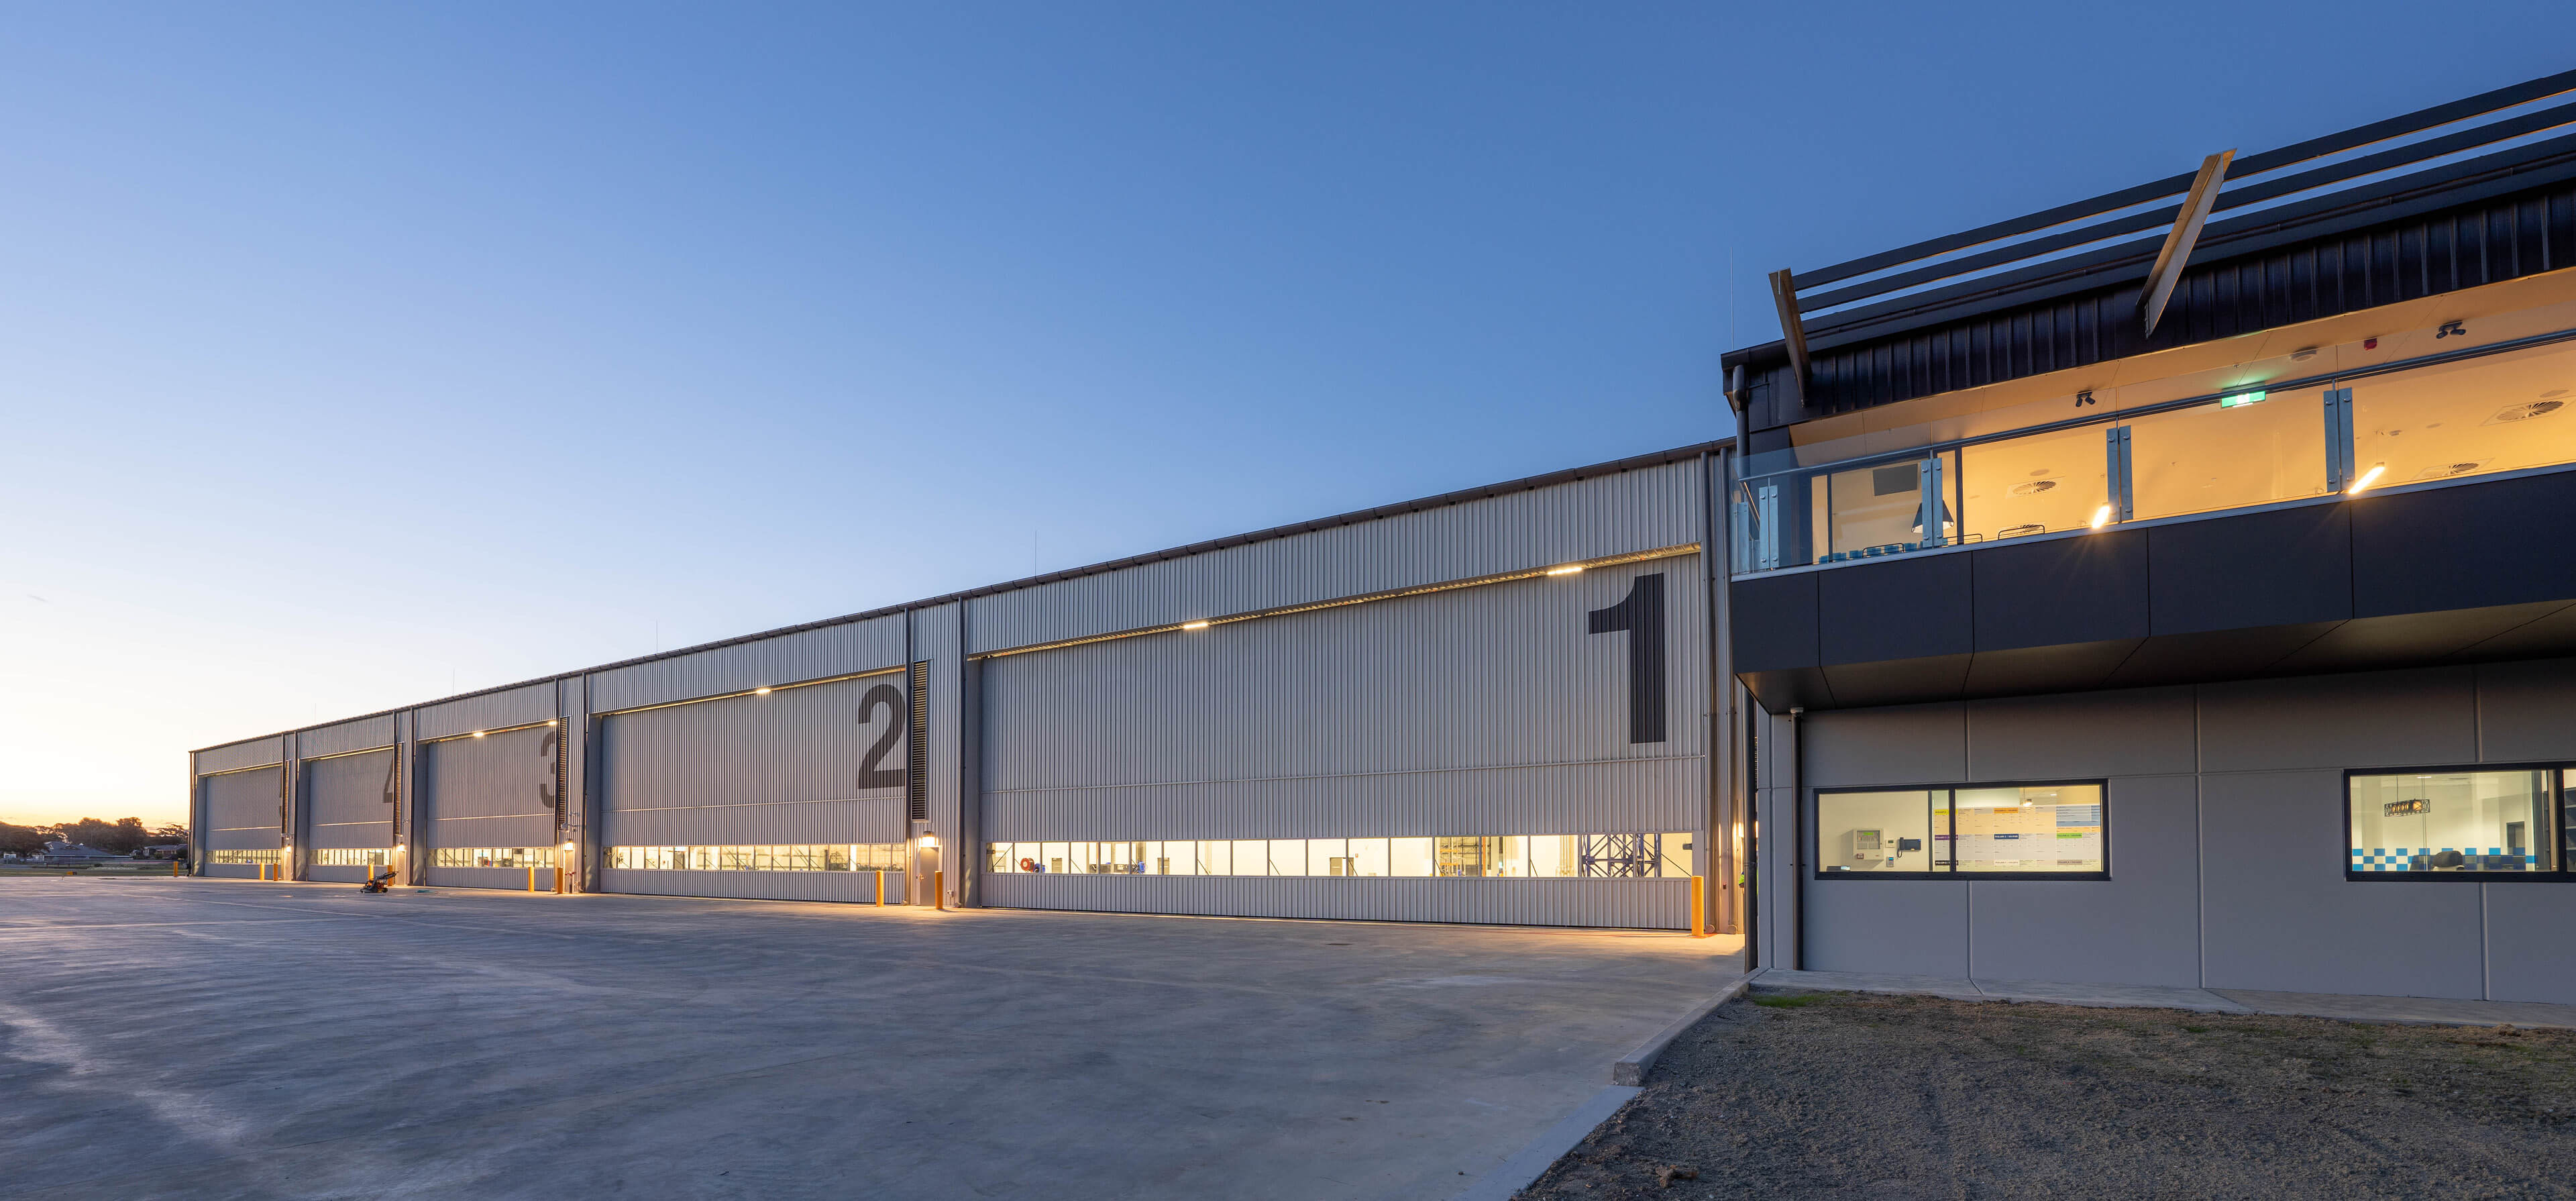 4 view of hangars 5 to 1 of purpose built integrated facility at polair facility bankstown taylor construction refurbishment and live environments